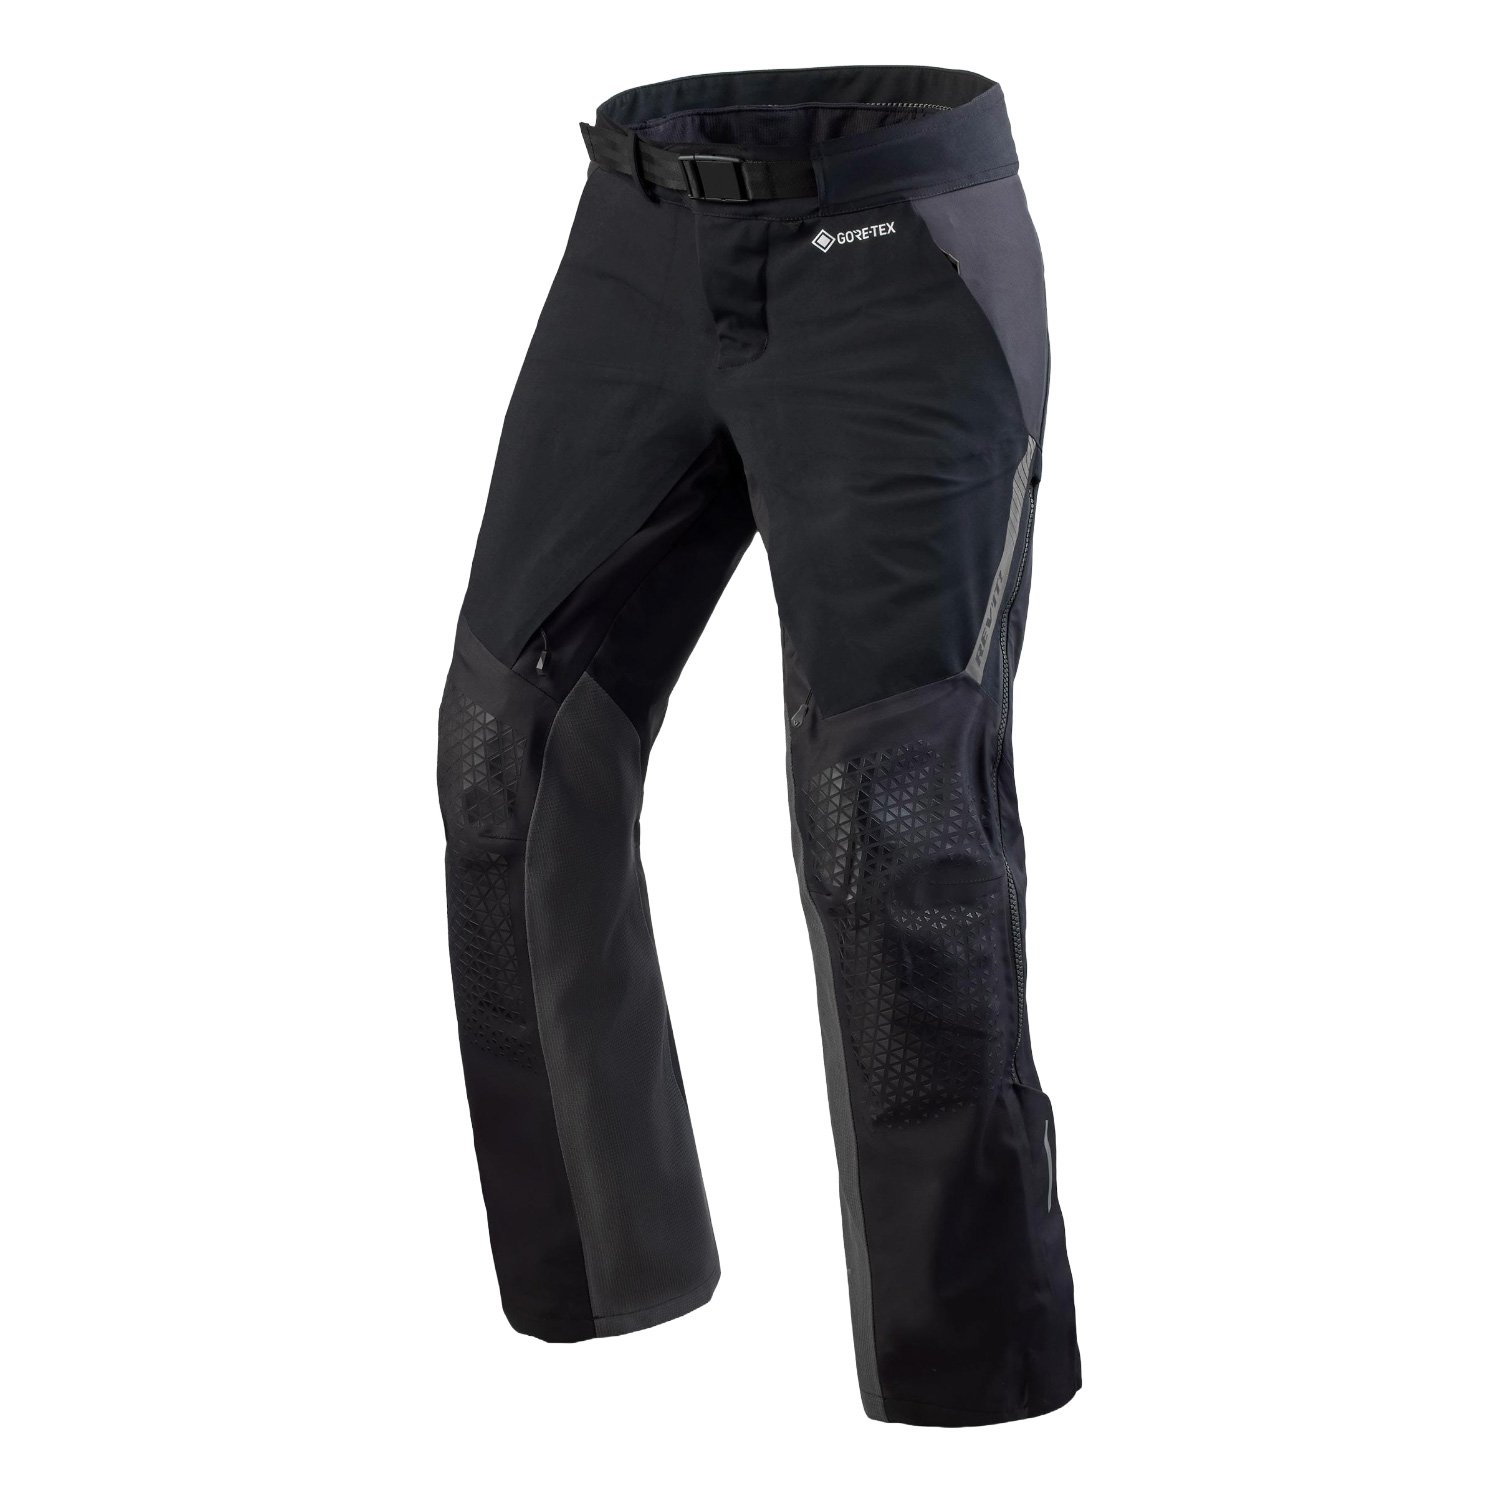 Image of REV'IT! Stratum GTX Black Grey Long Motorcycle Pants Size XL ID 8700001351294